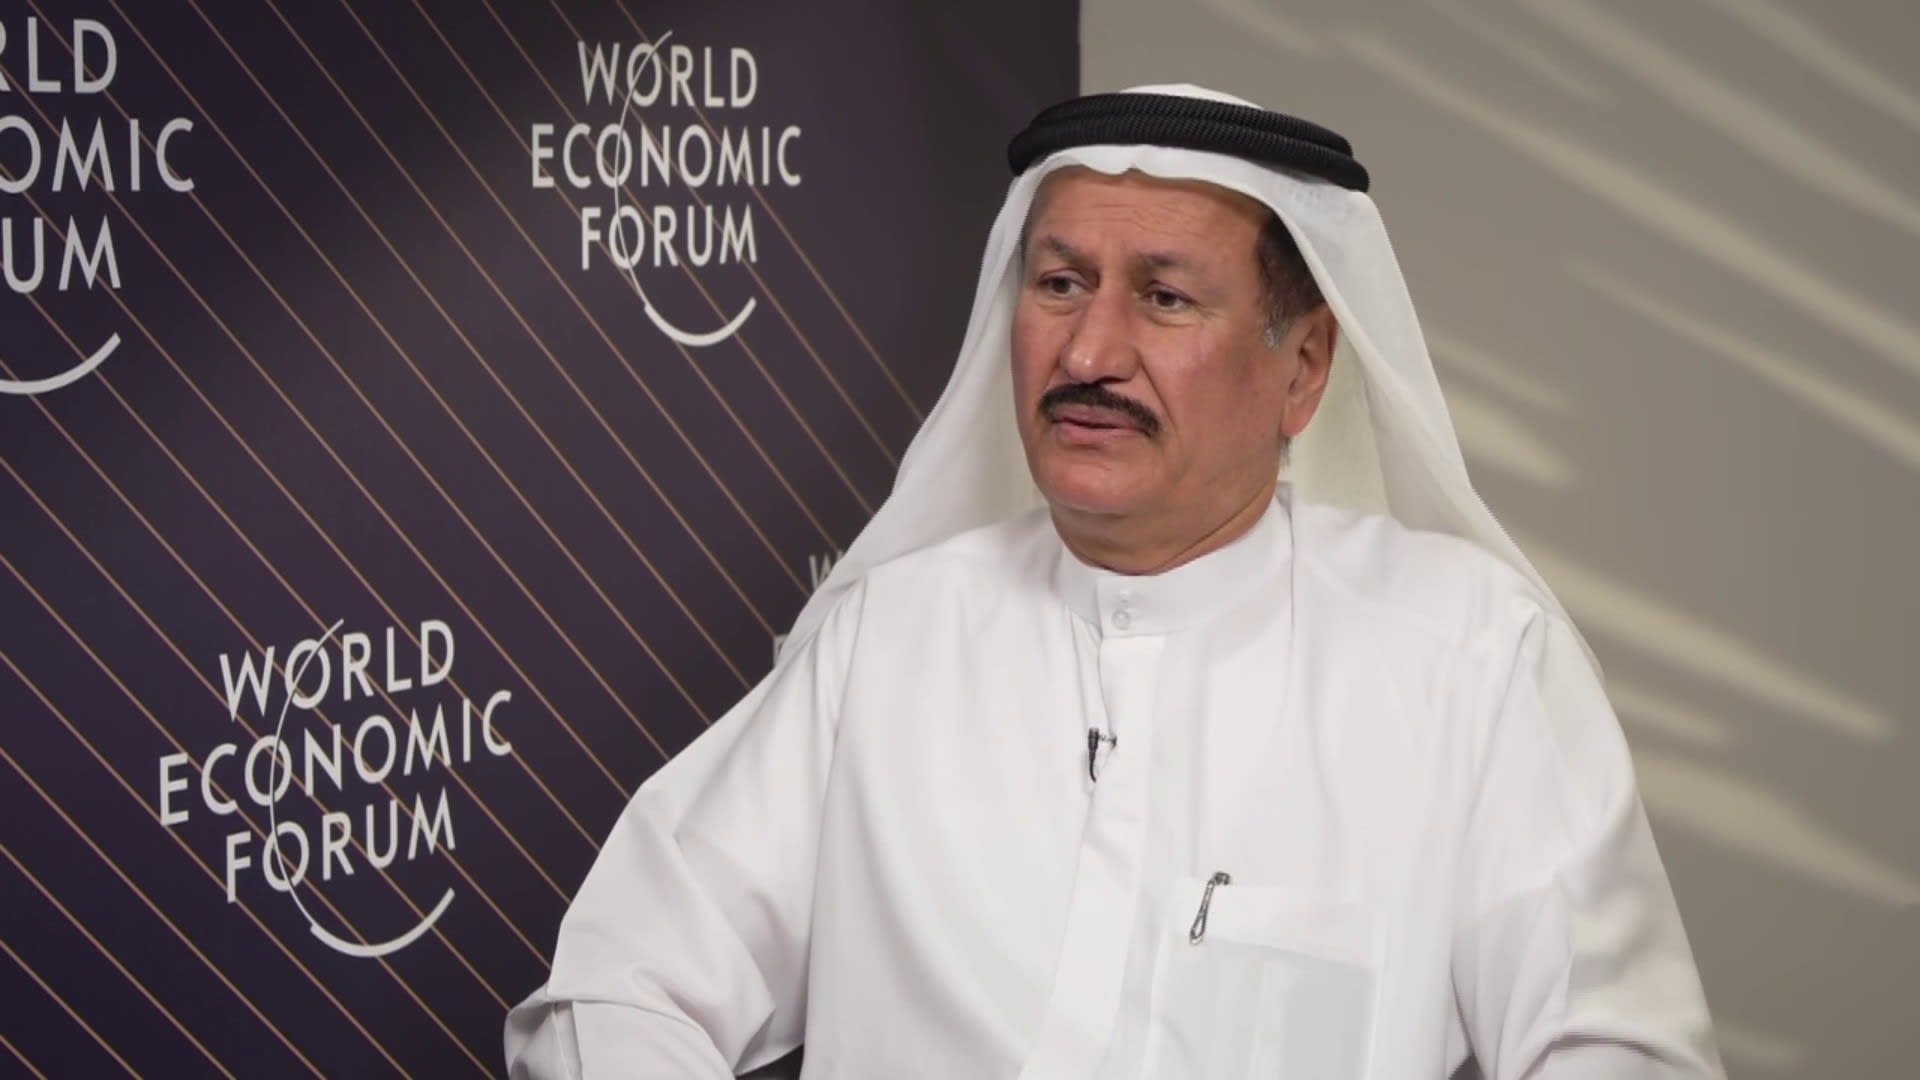 Company focus will be on Saudi Arabia, DAMAC chairman says [Video]